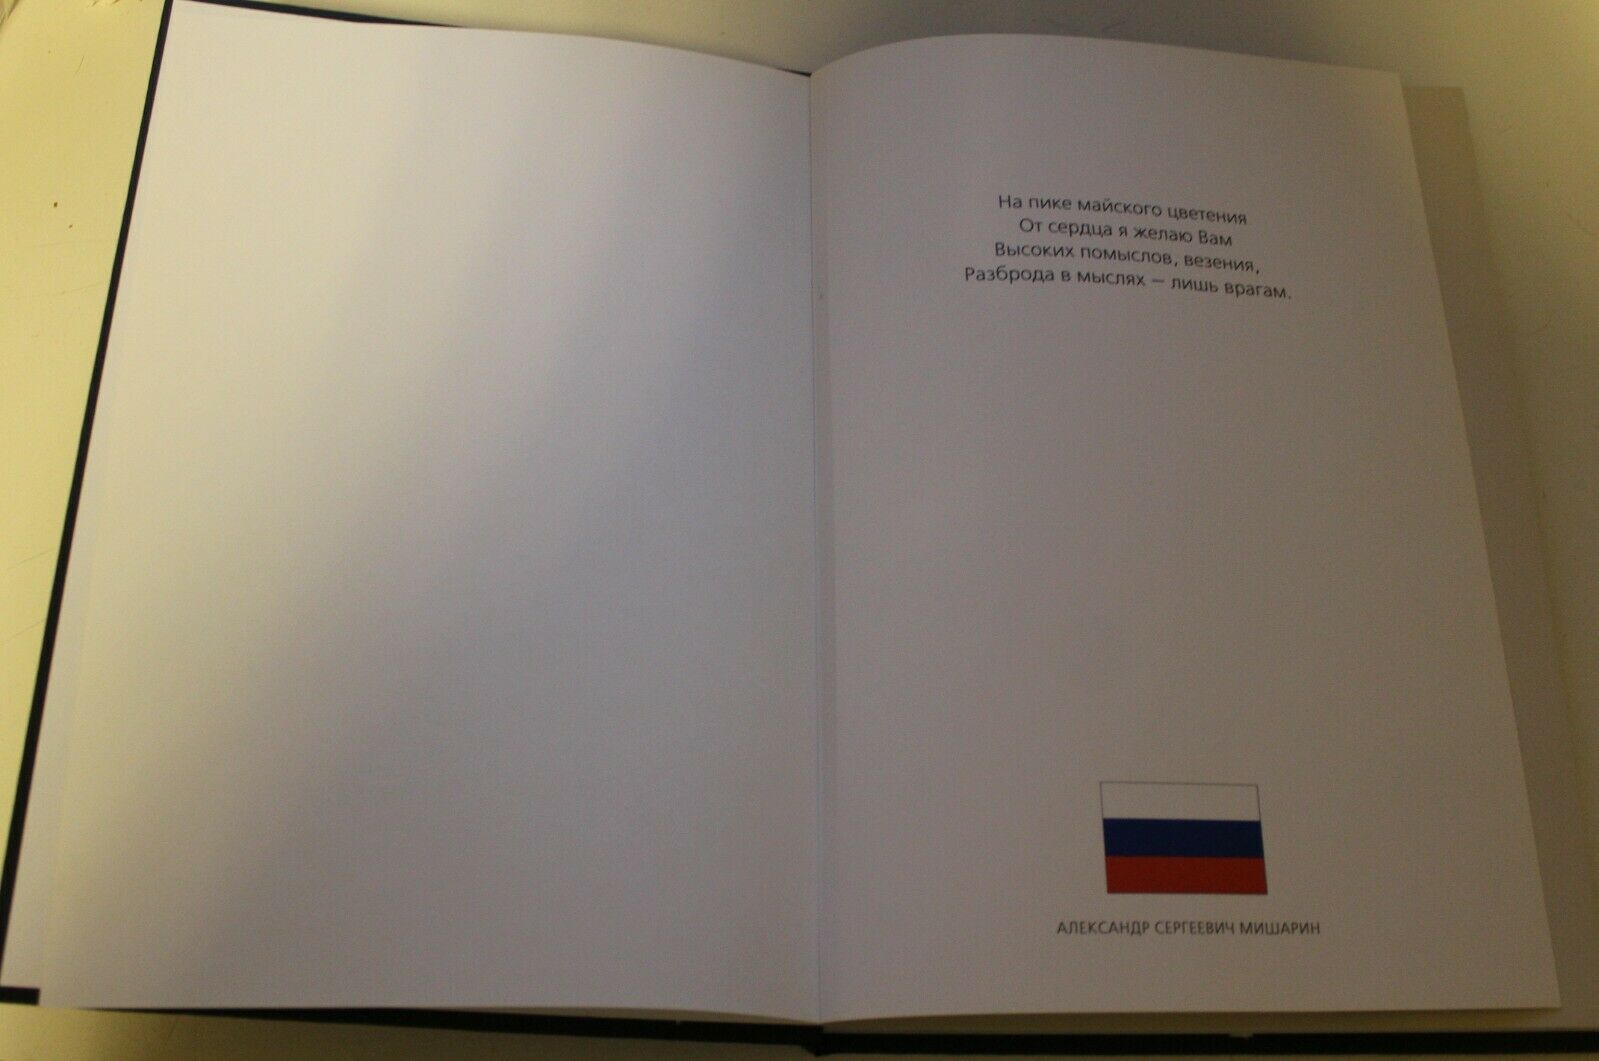 10754.Album: Anatoly Karpov. Few copies in hardcover. Copy of Governor Misharin 2010